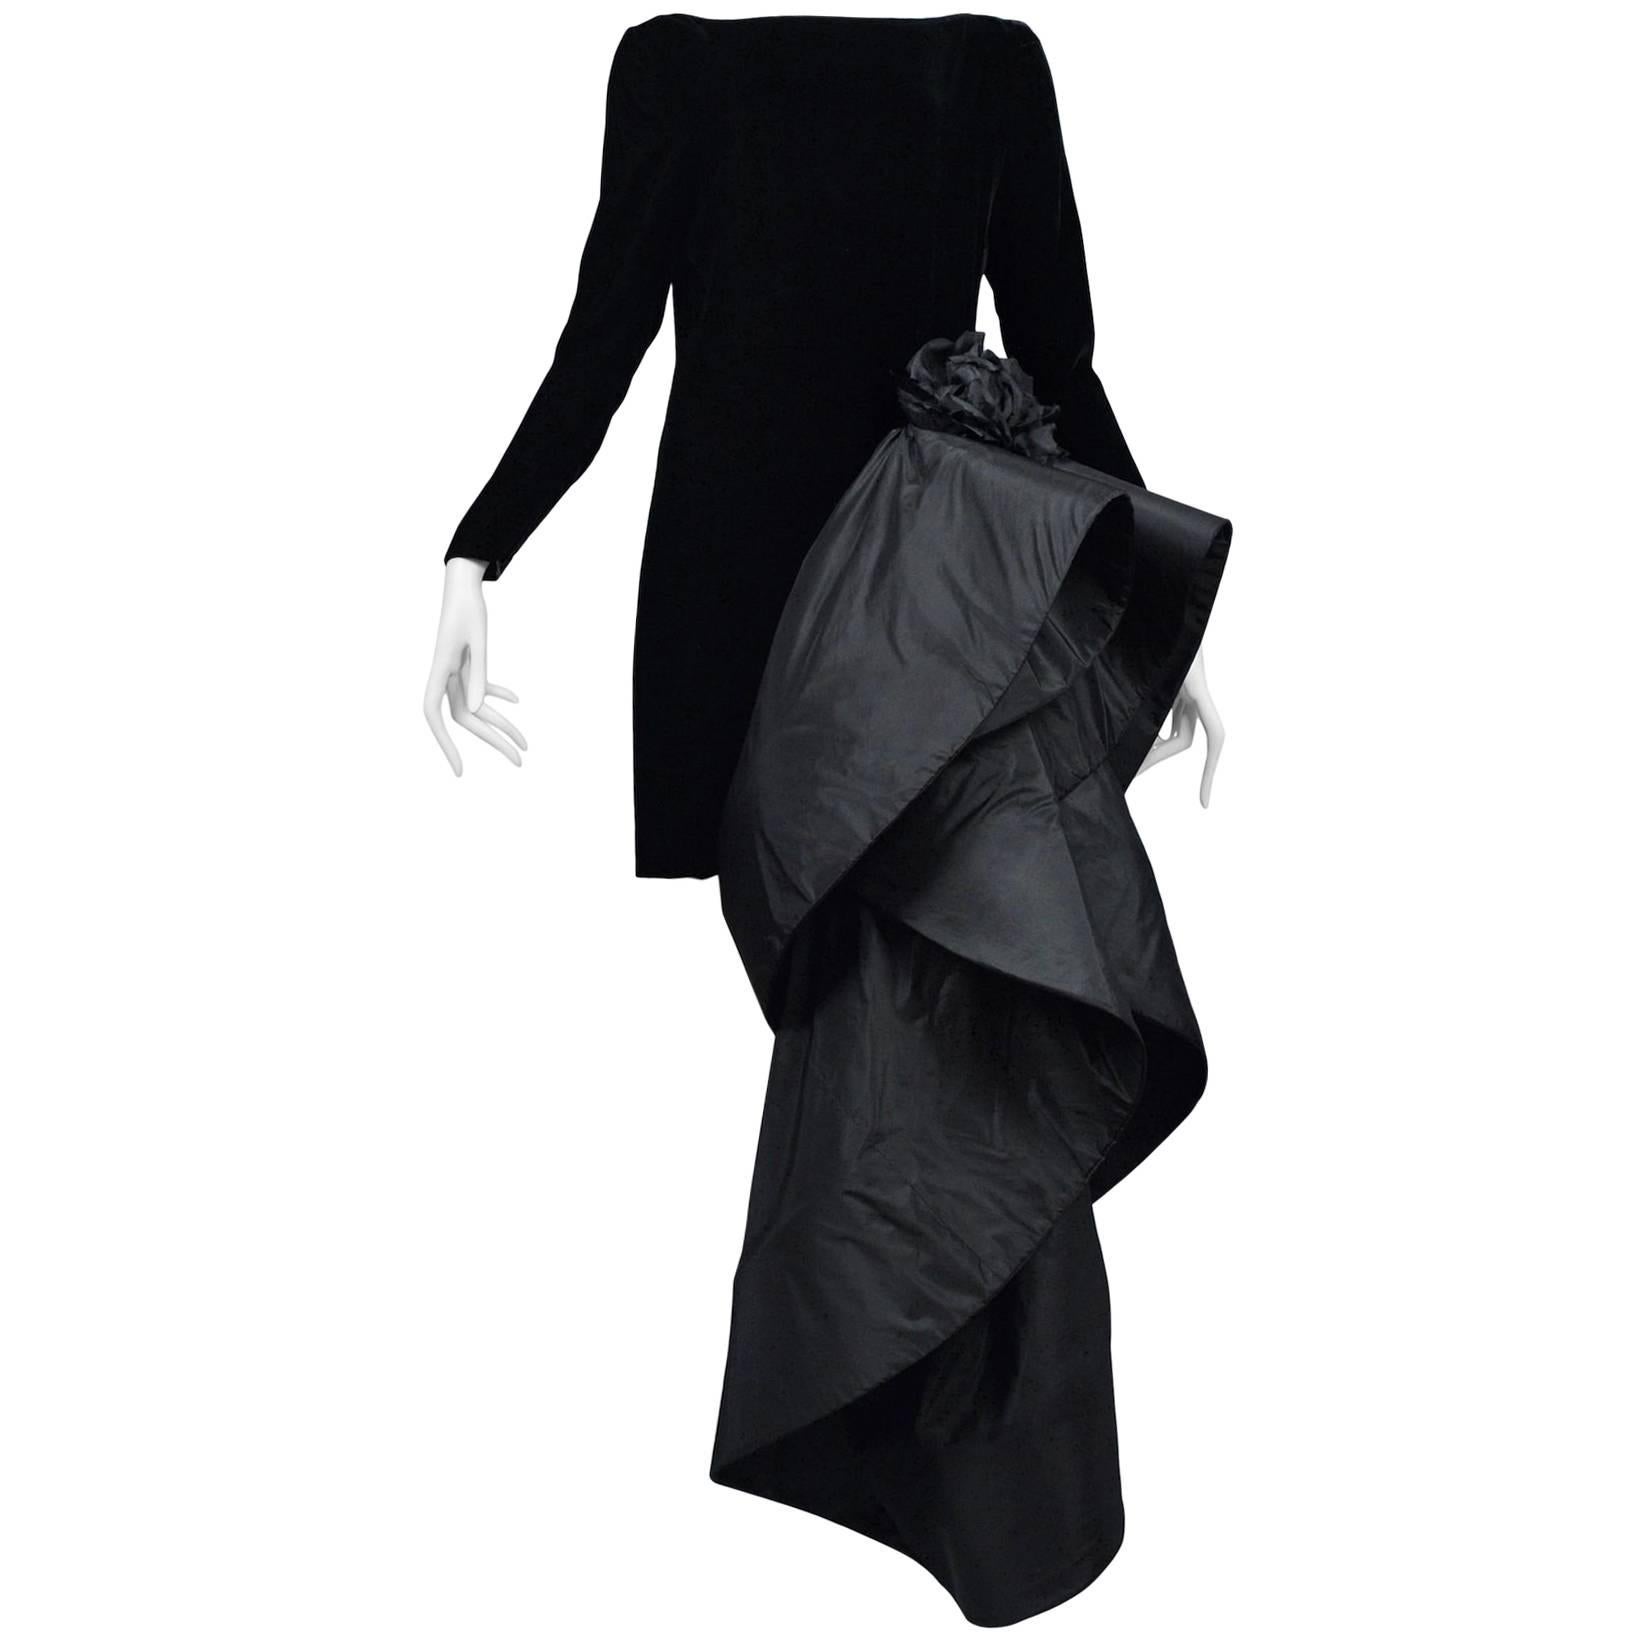 Pierre Cardin Couture Avant Garde Train Gown